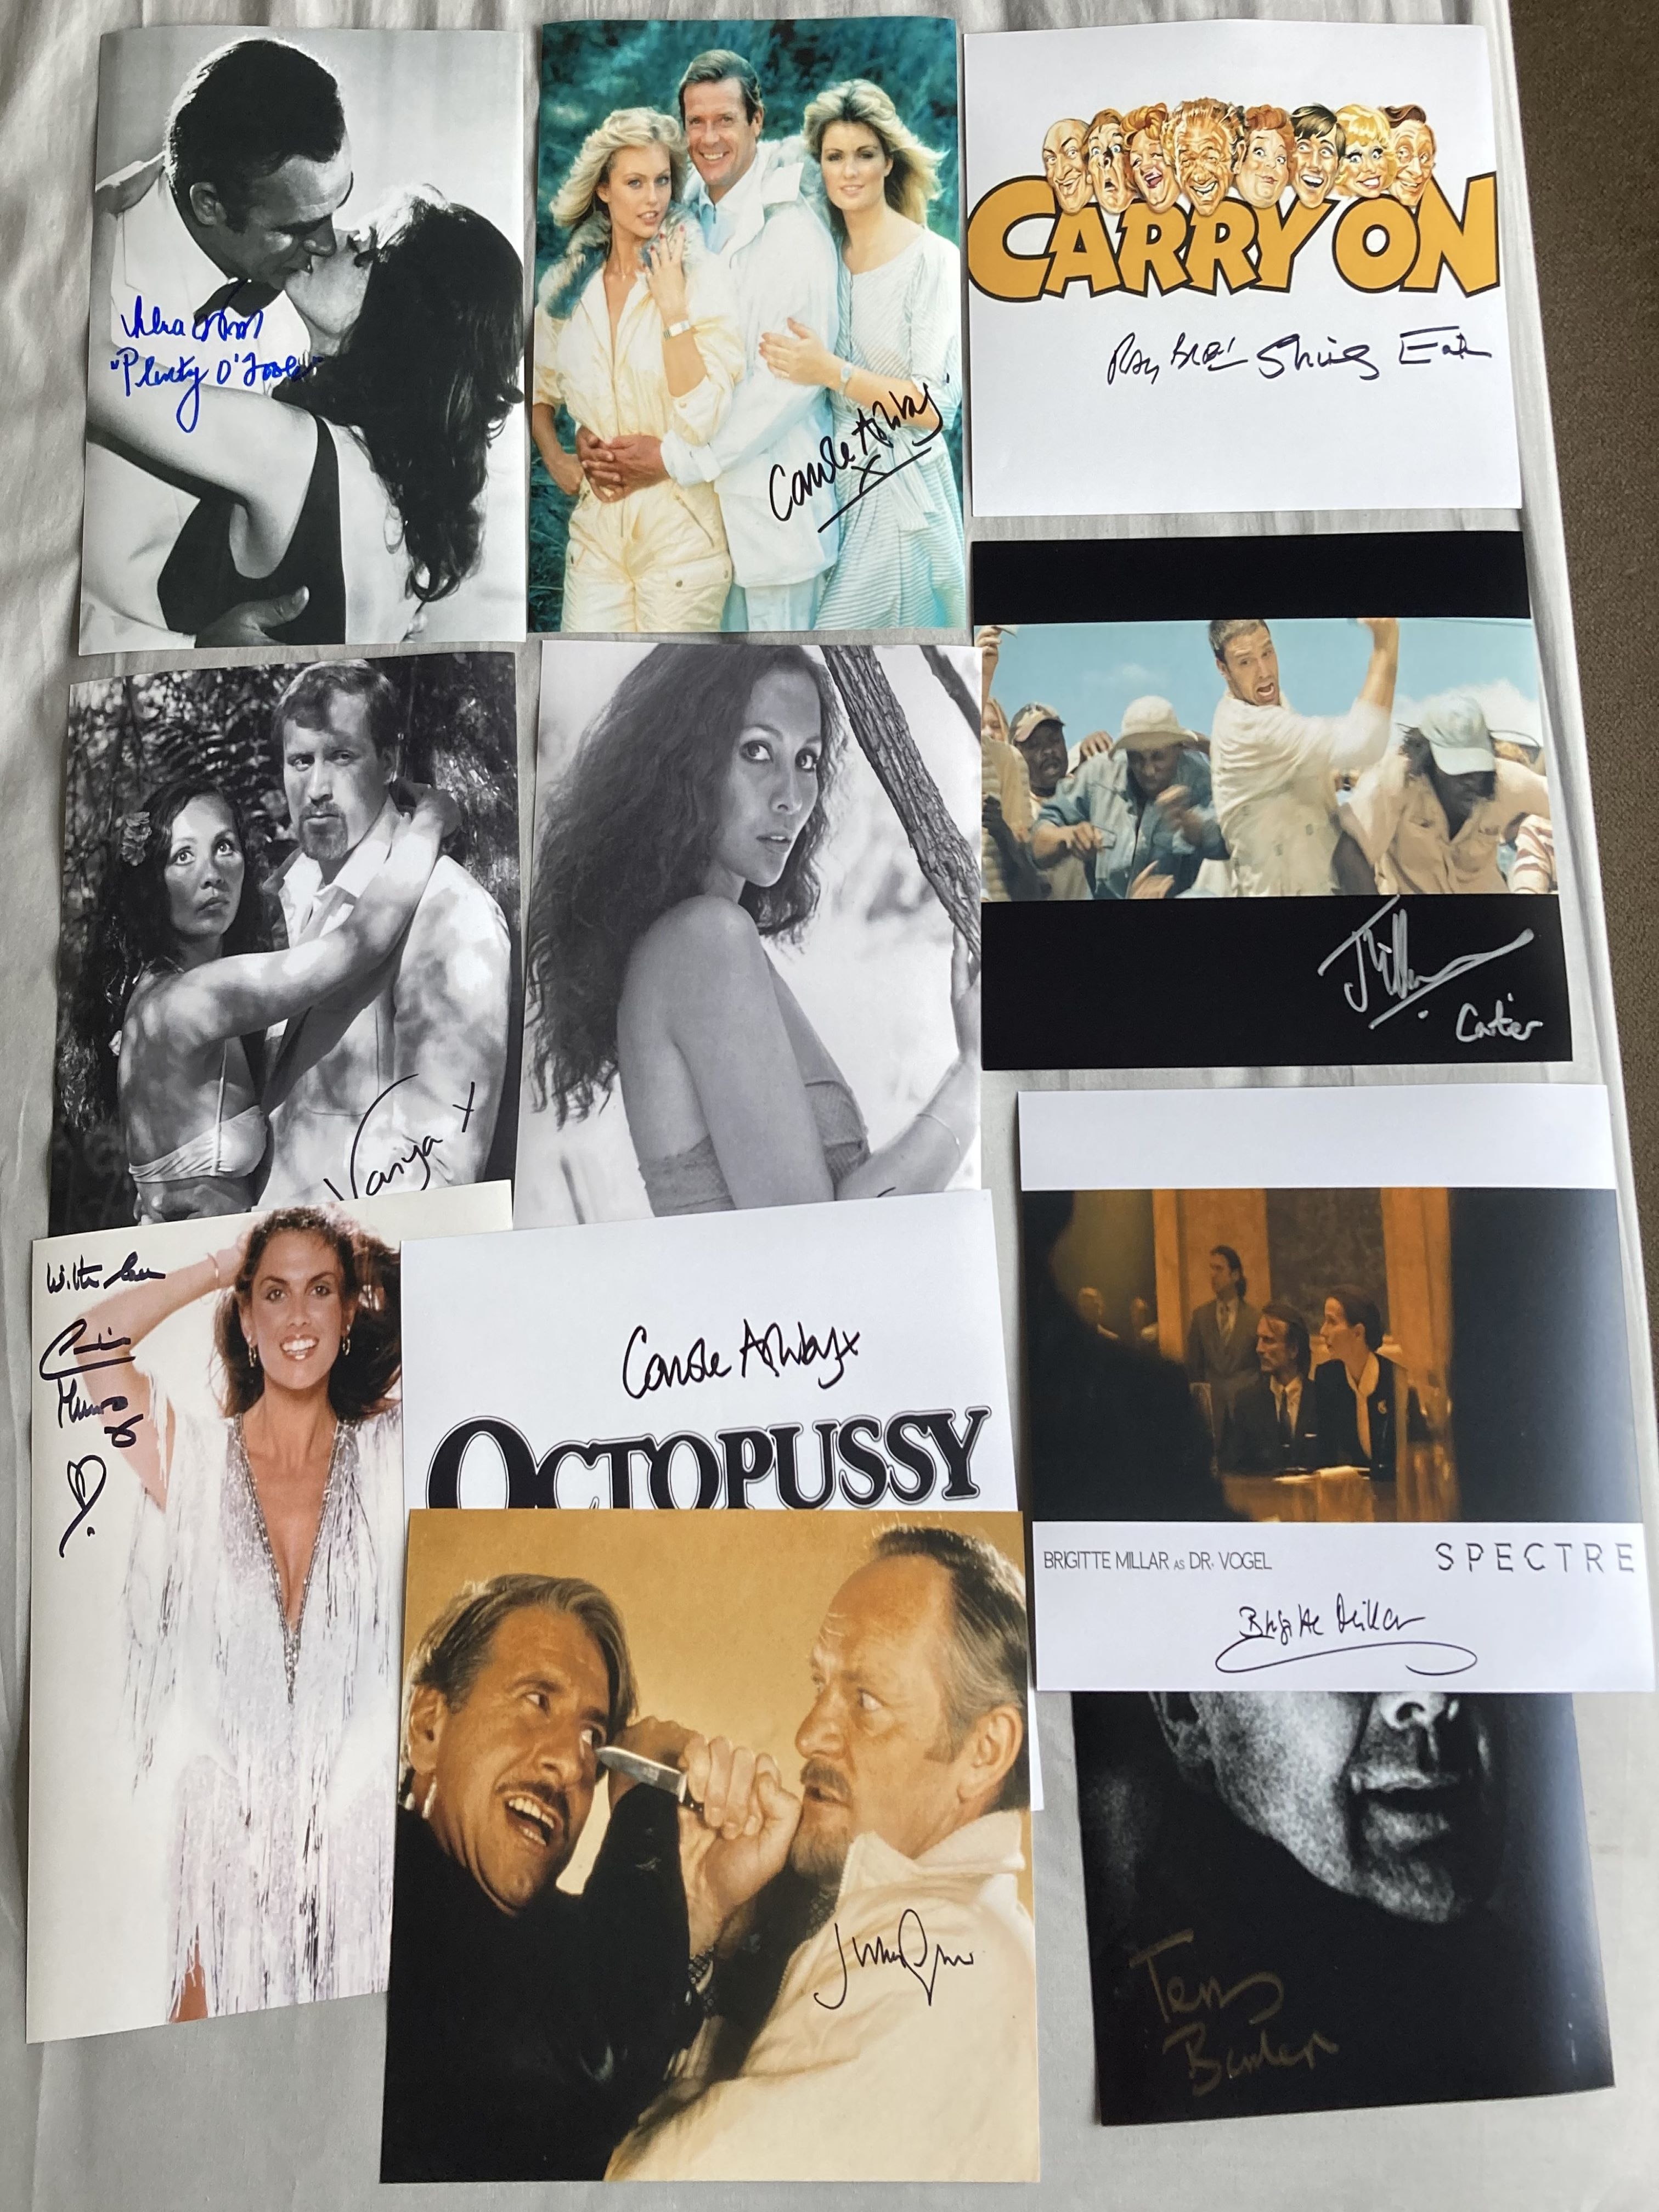 James Bond Collection 11 signed 10 x 8 photos including Lana Wood, Caroline Munro, Shirley Eaton,